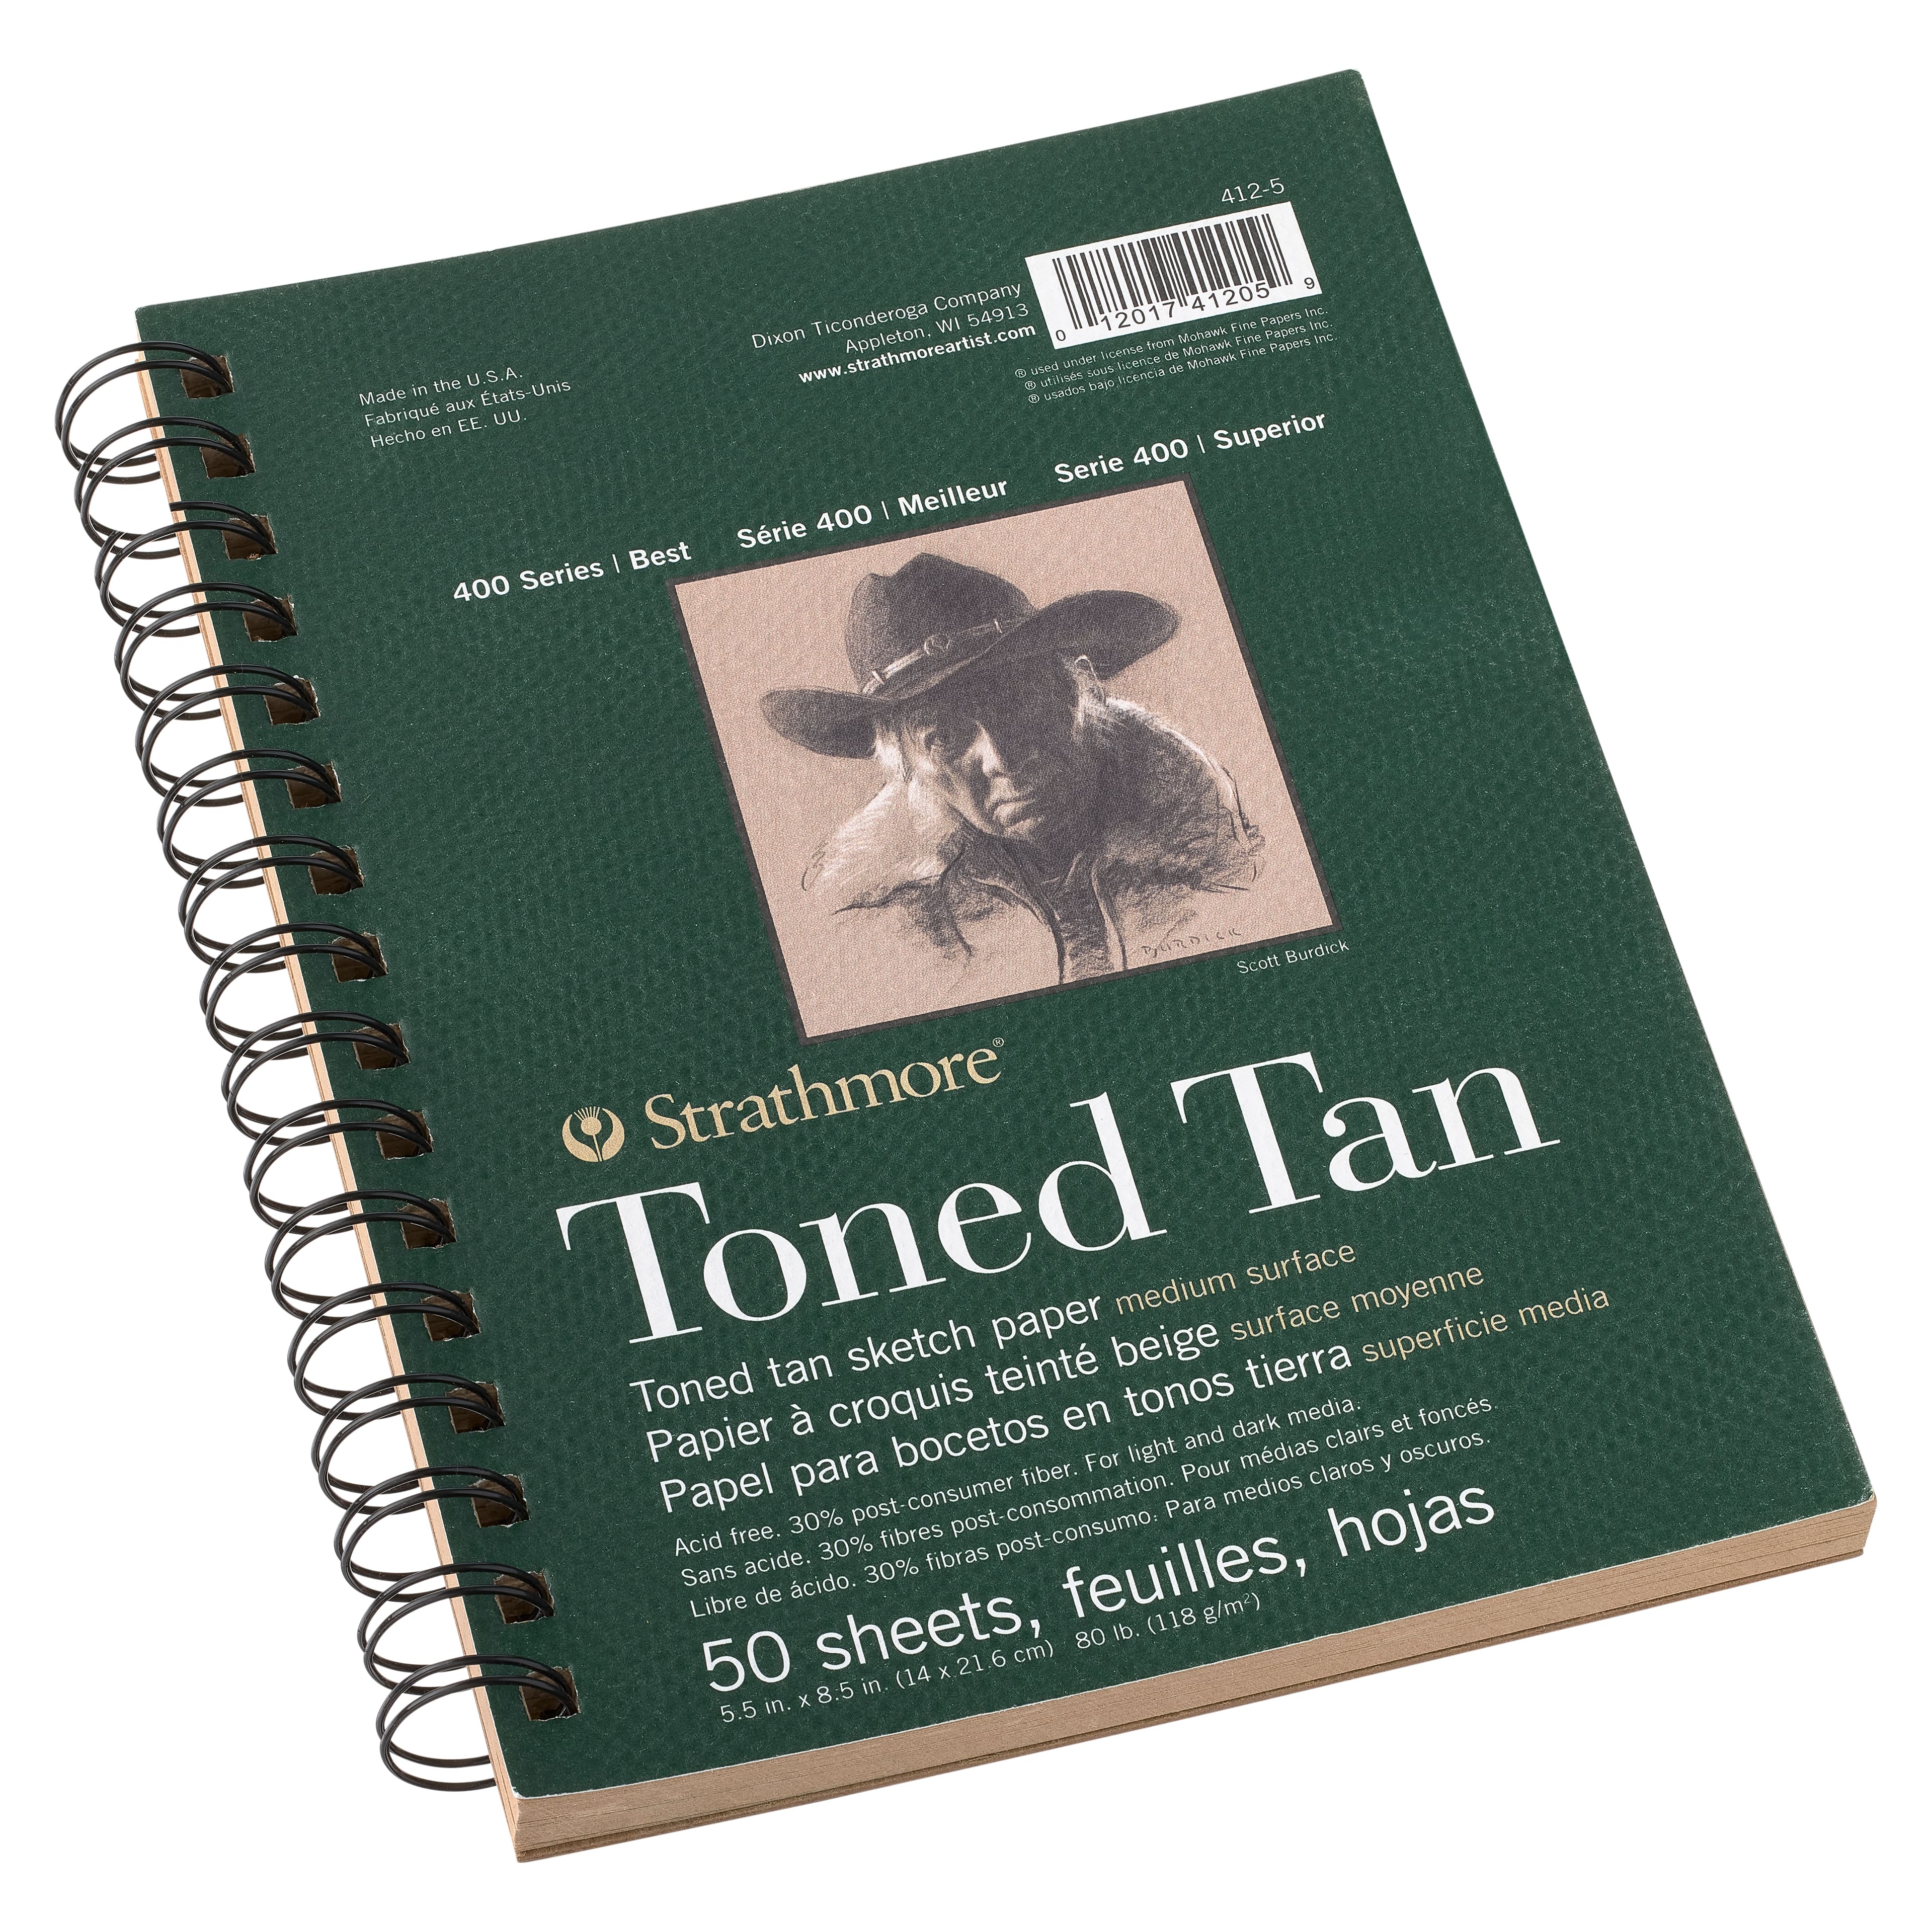 Strathmore Toned Tan Sketchbook Review 